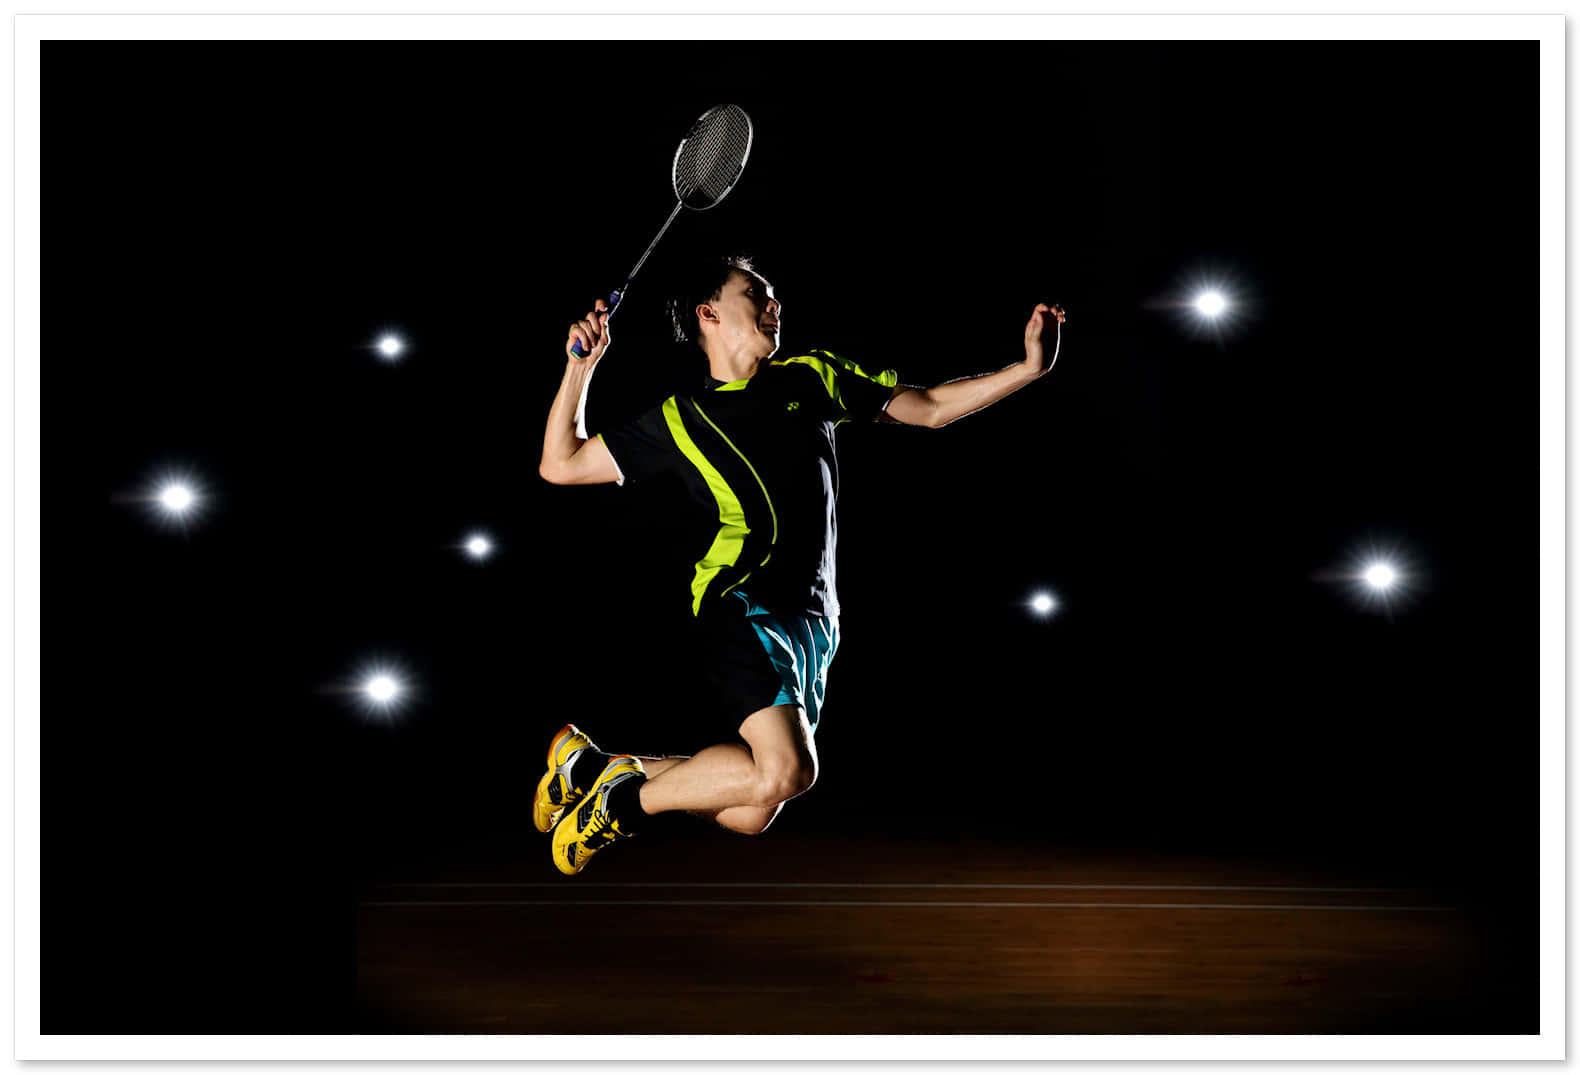 “Hitting Shuttlecock: The Thrill of Badminton”